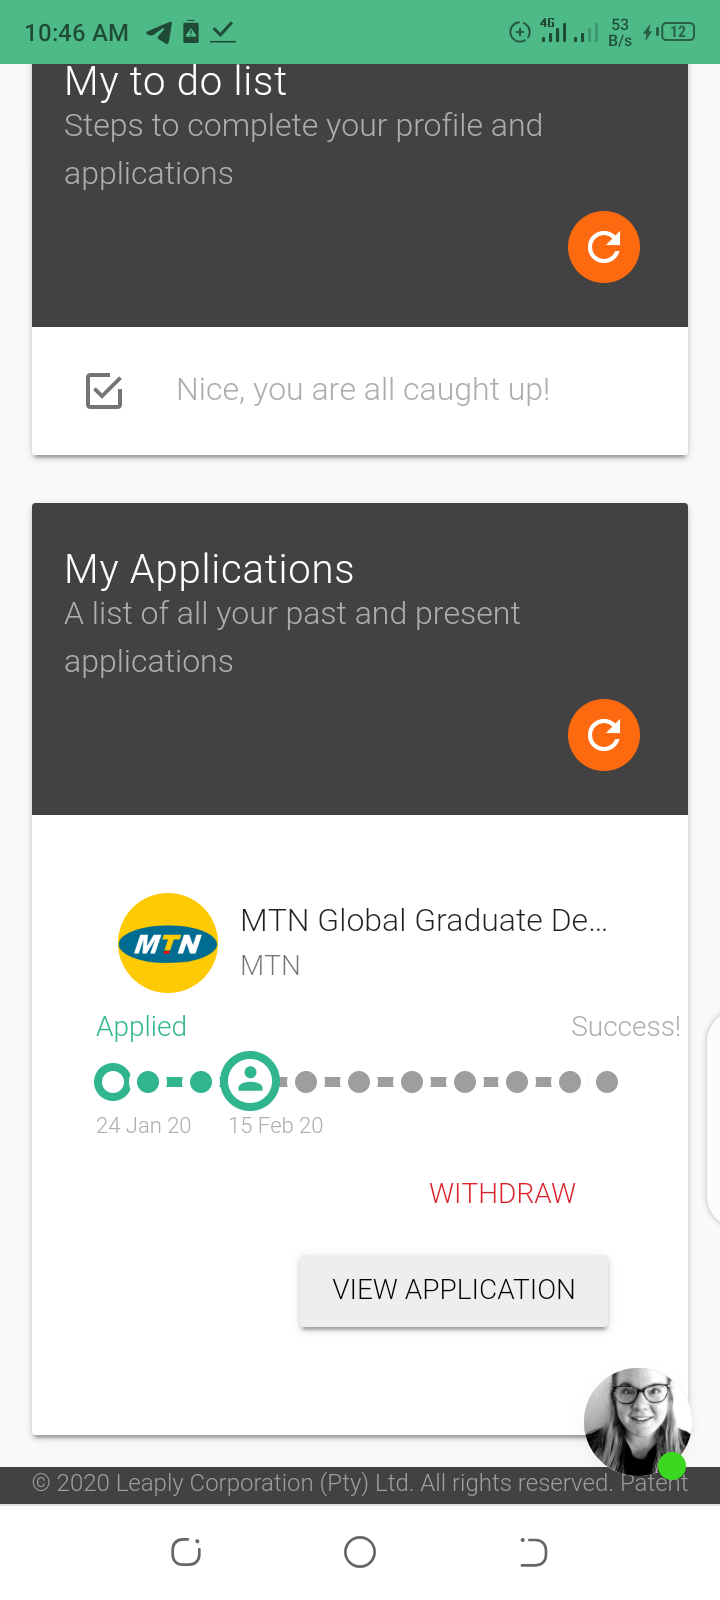 MTN Graduate Development Programme Aptitude Test Invite Jobs Vacancies 14 Nigeria